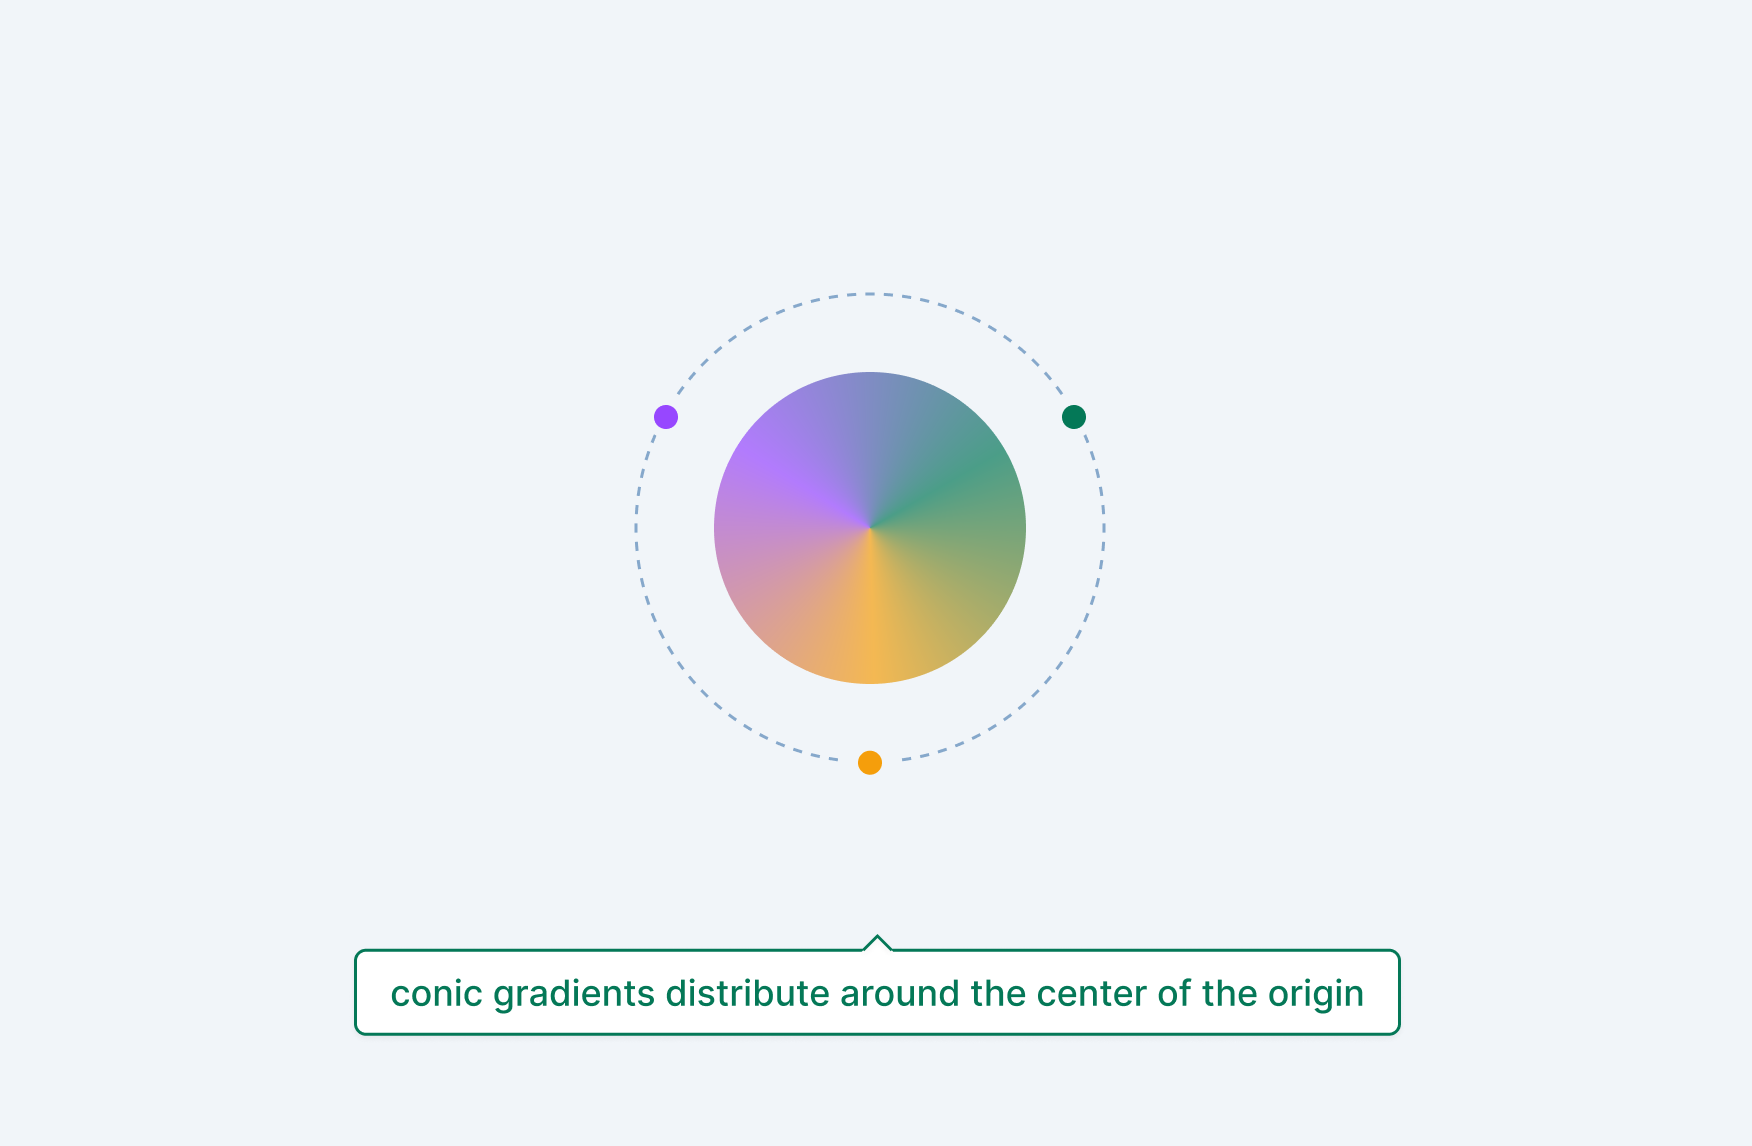 Conic gradients distribute around the center of the origin